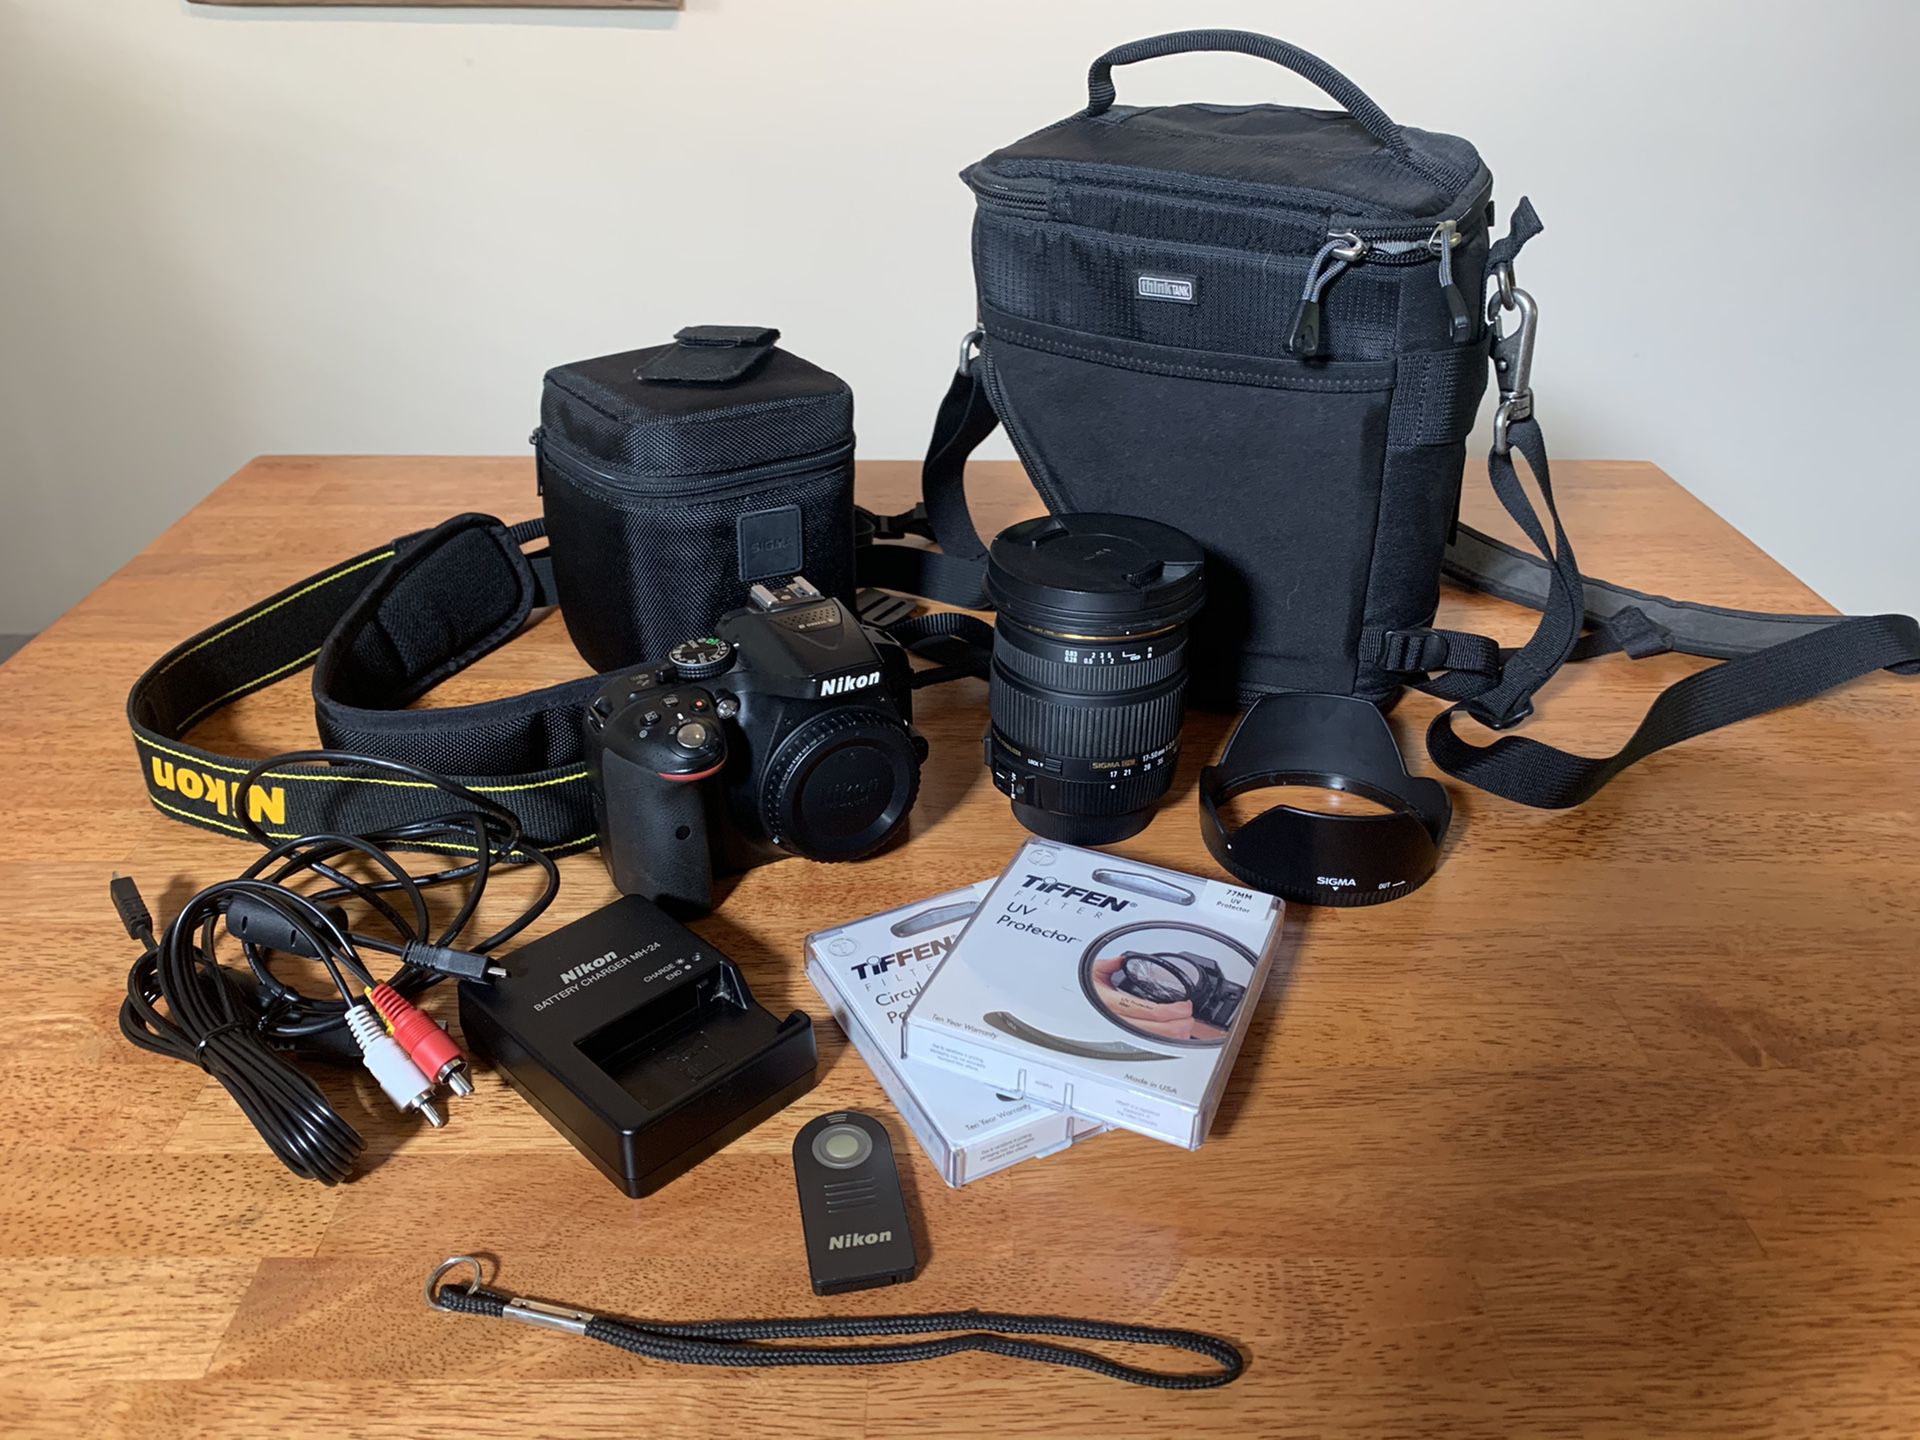 Nikon D5300 Sigma 17-50mm f2.8 and accessories